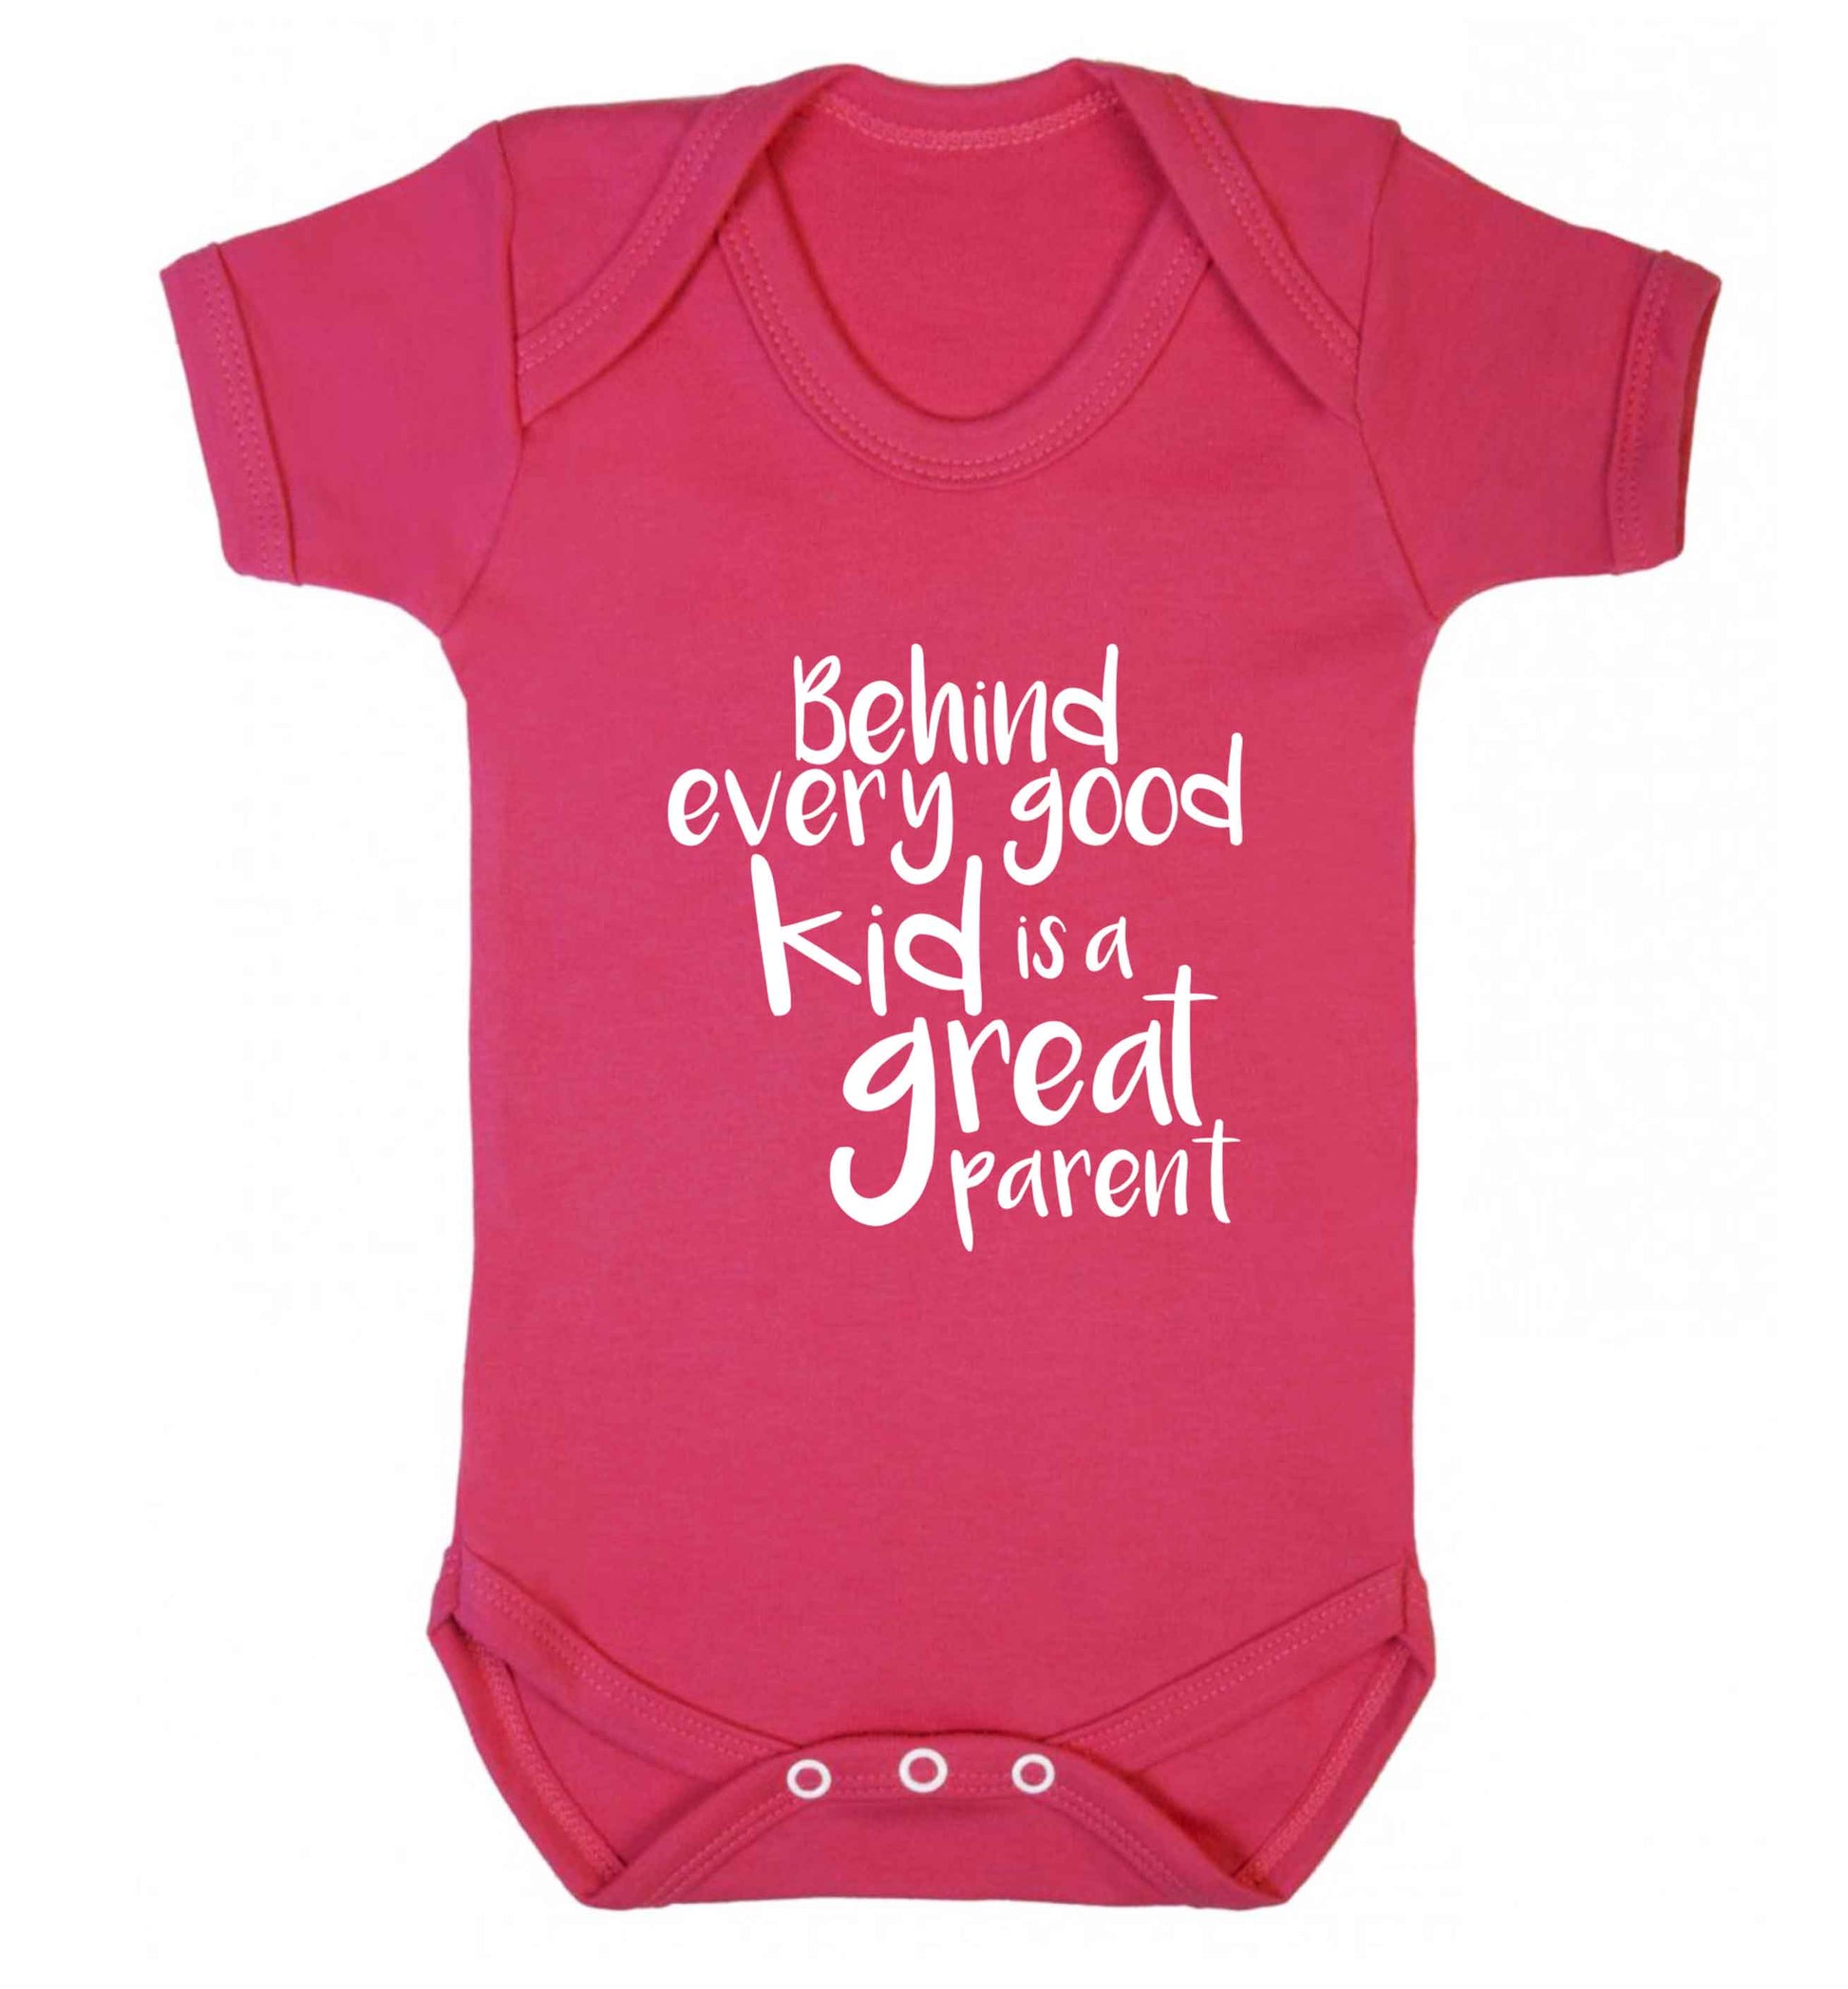 Behind every good kid is a great parent baby vest dark pink 18-24 months